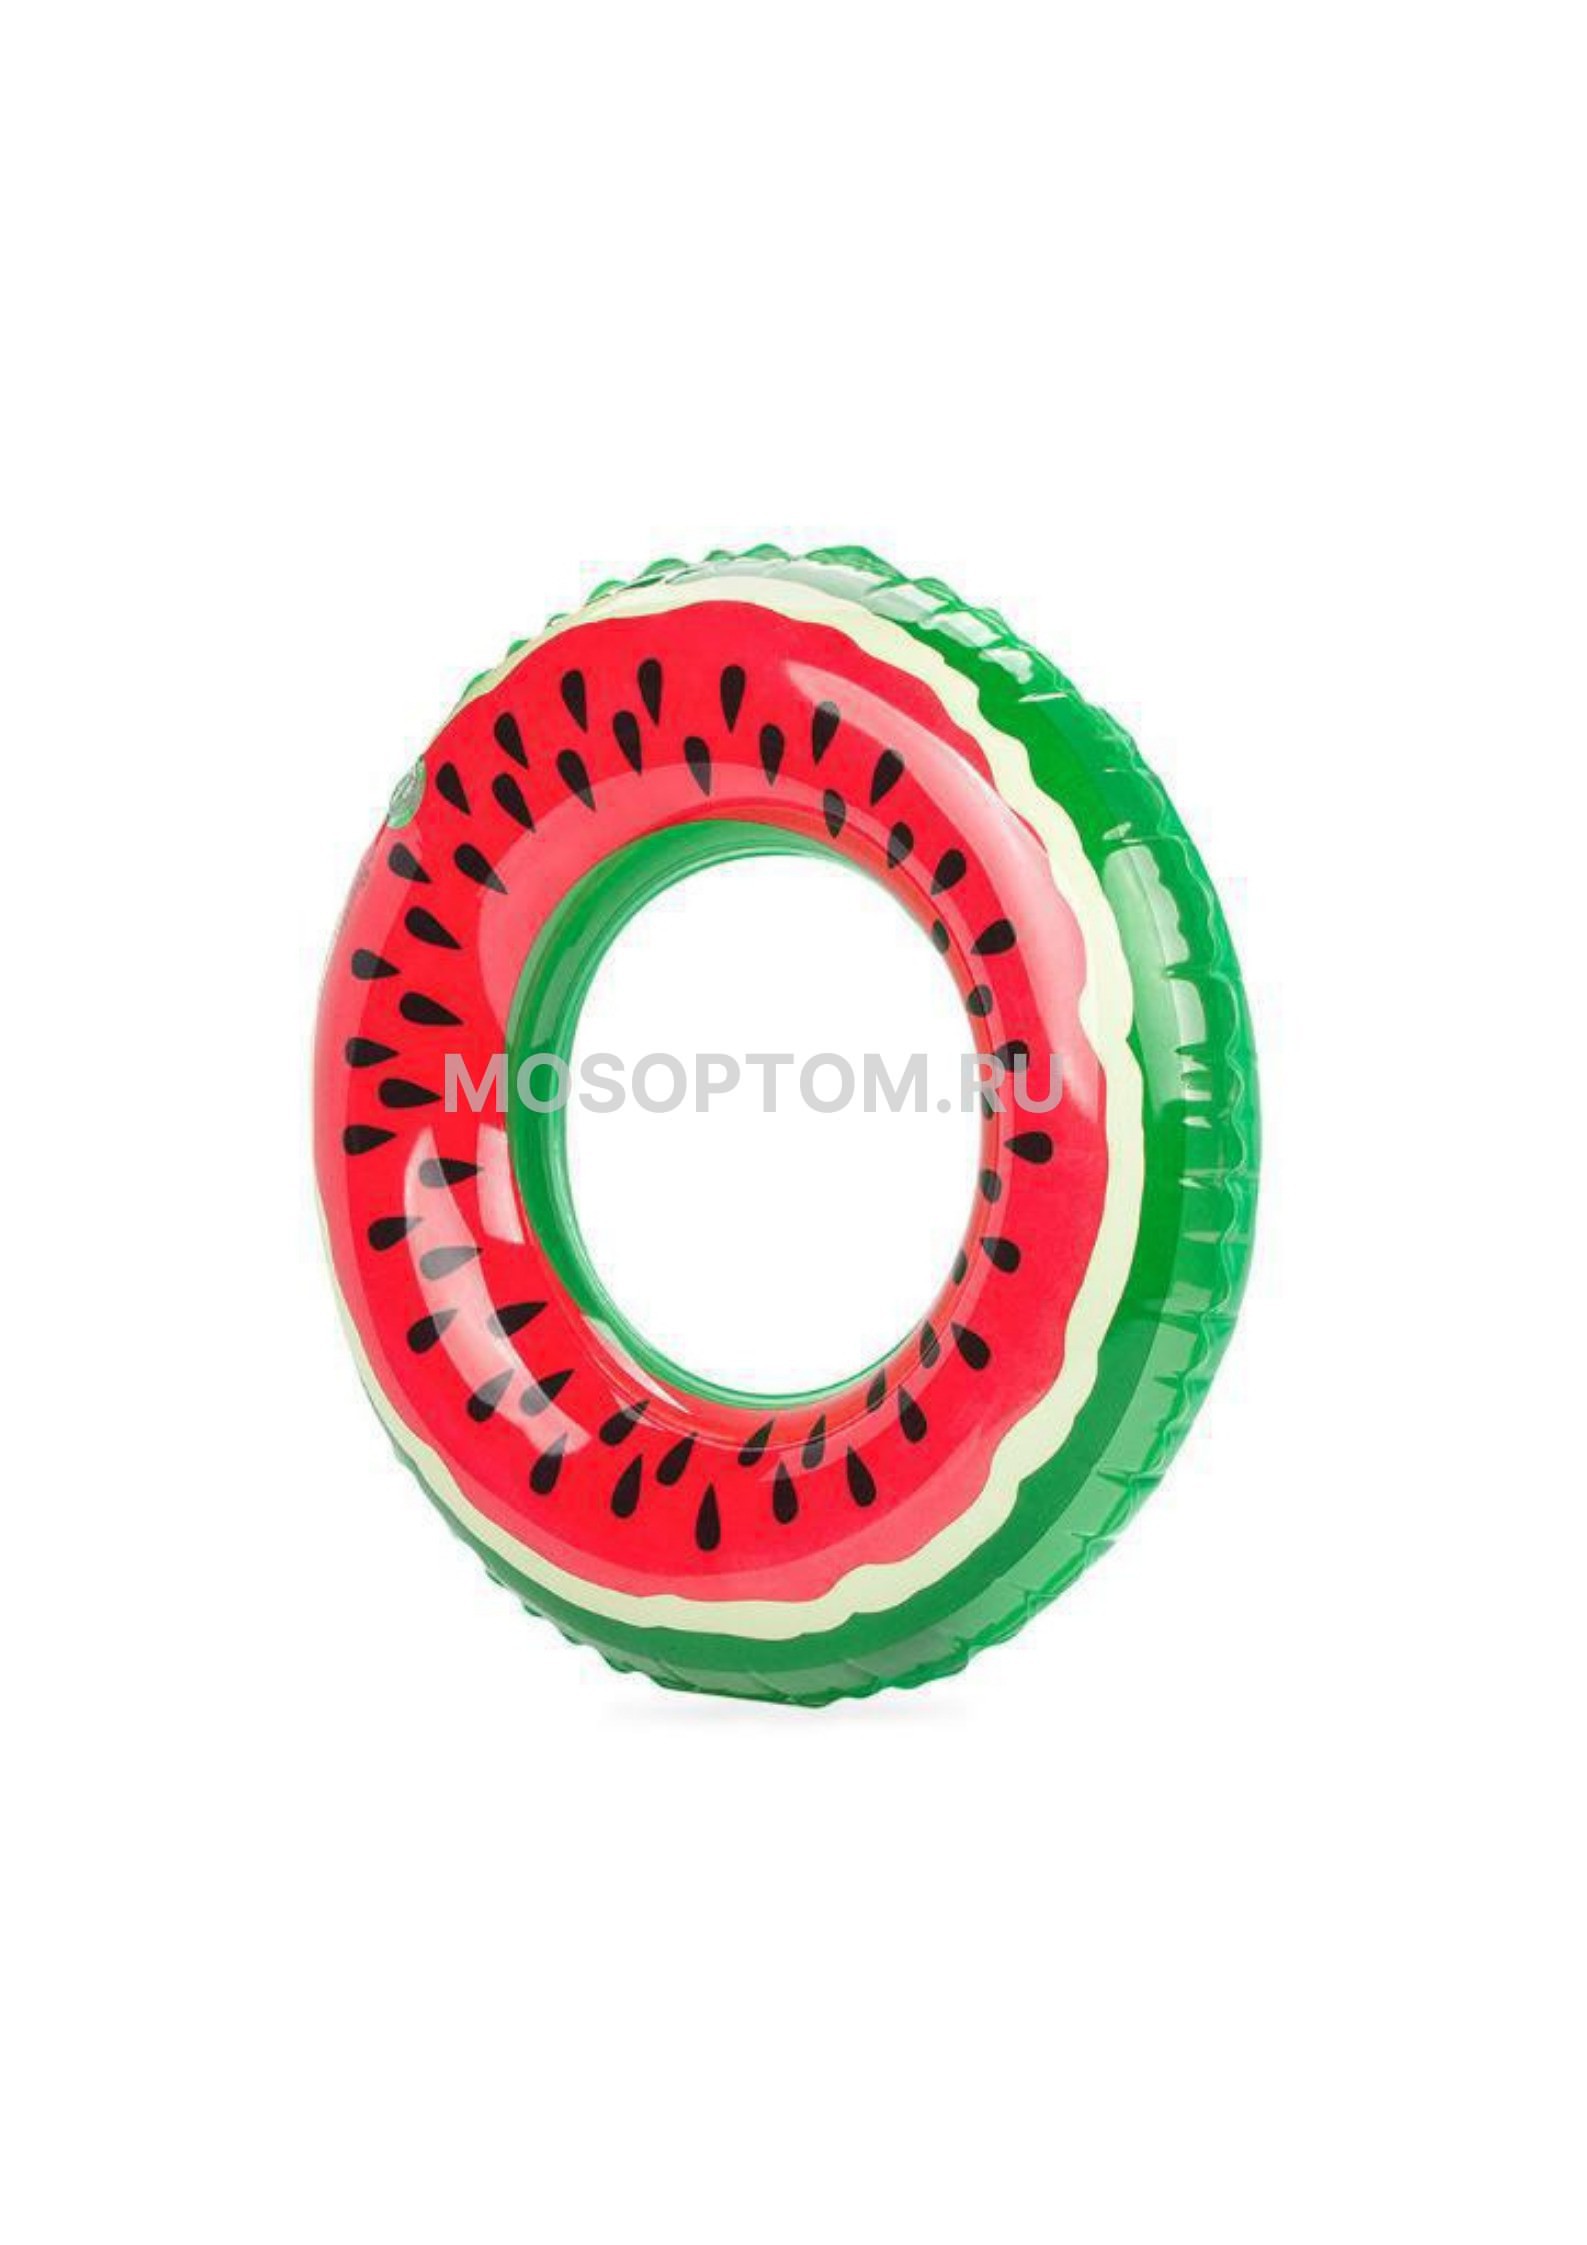 Надувной круг Арбуз Watermelon 60см оптом - Фото №2